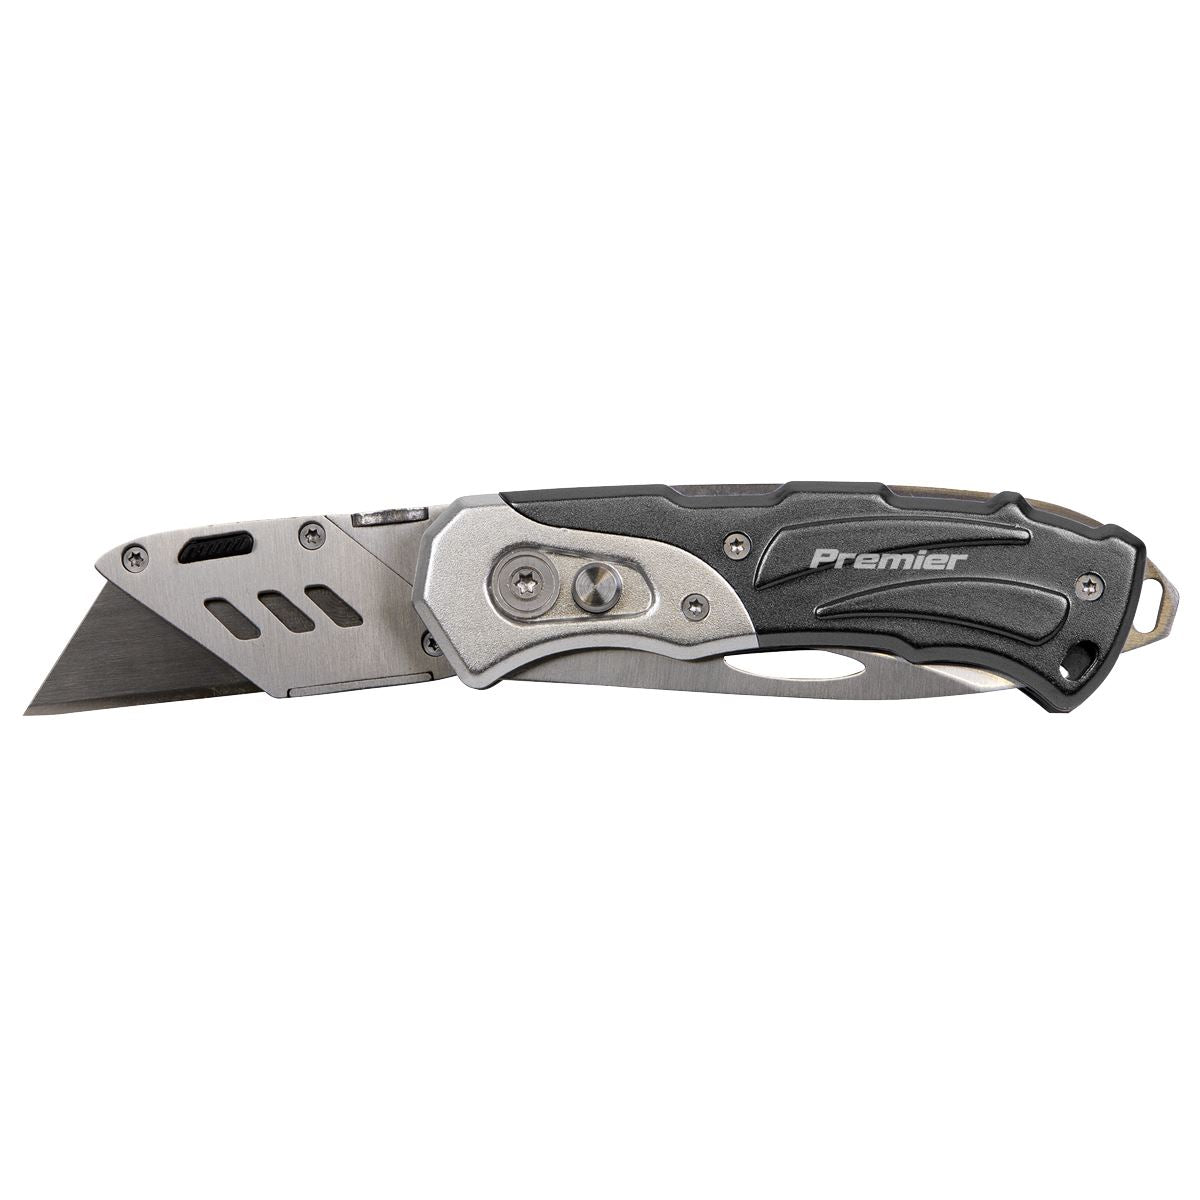 Sealey Premier Pocket Knife Locking Twin-Blade